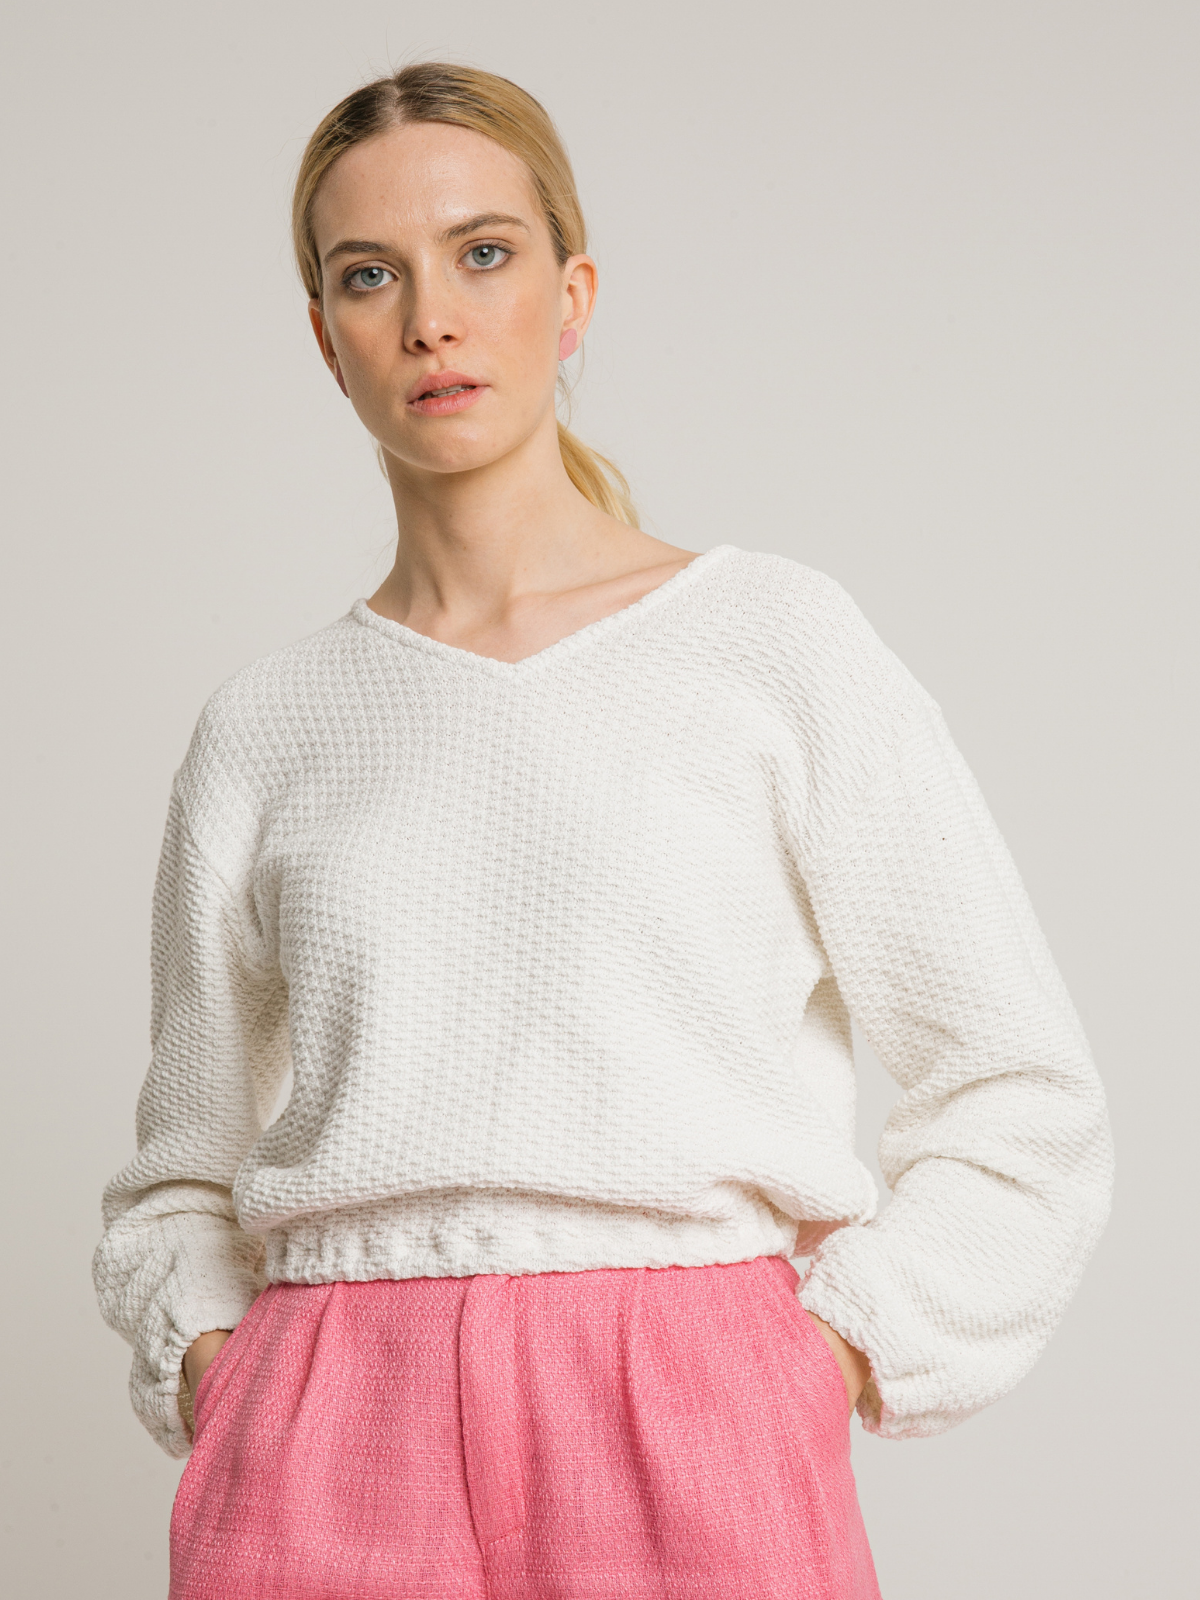 White thin knitted "V" neck sweater